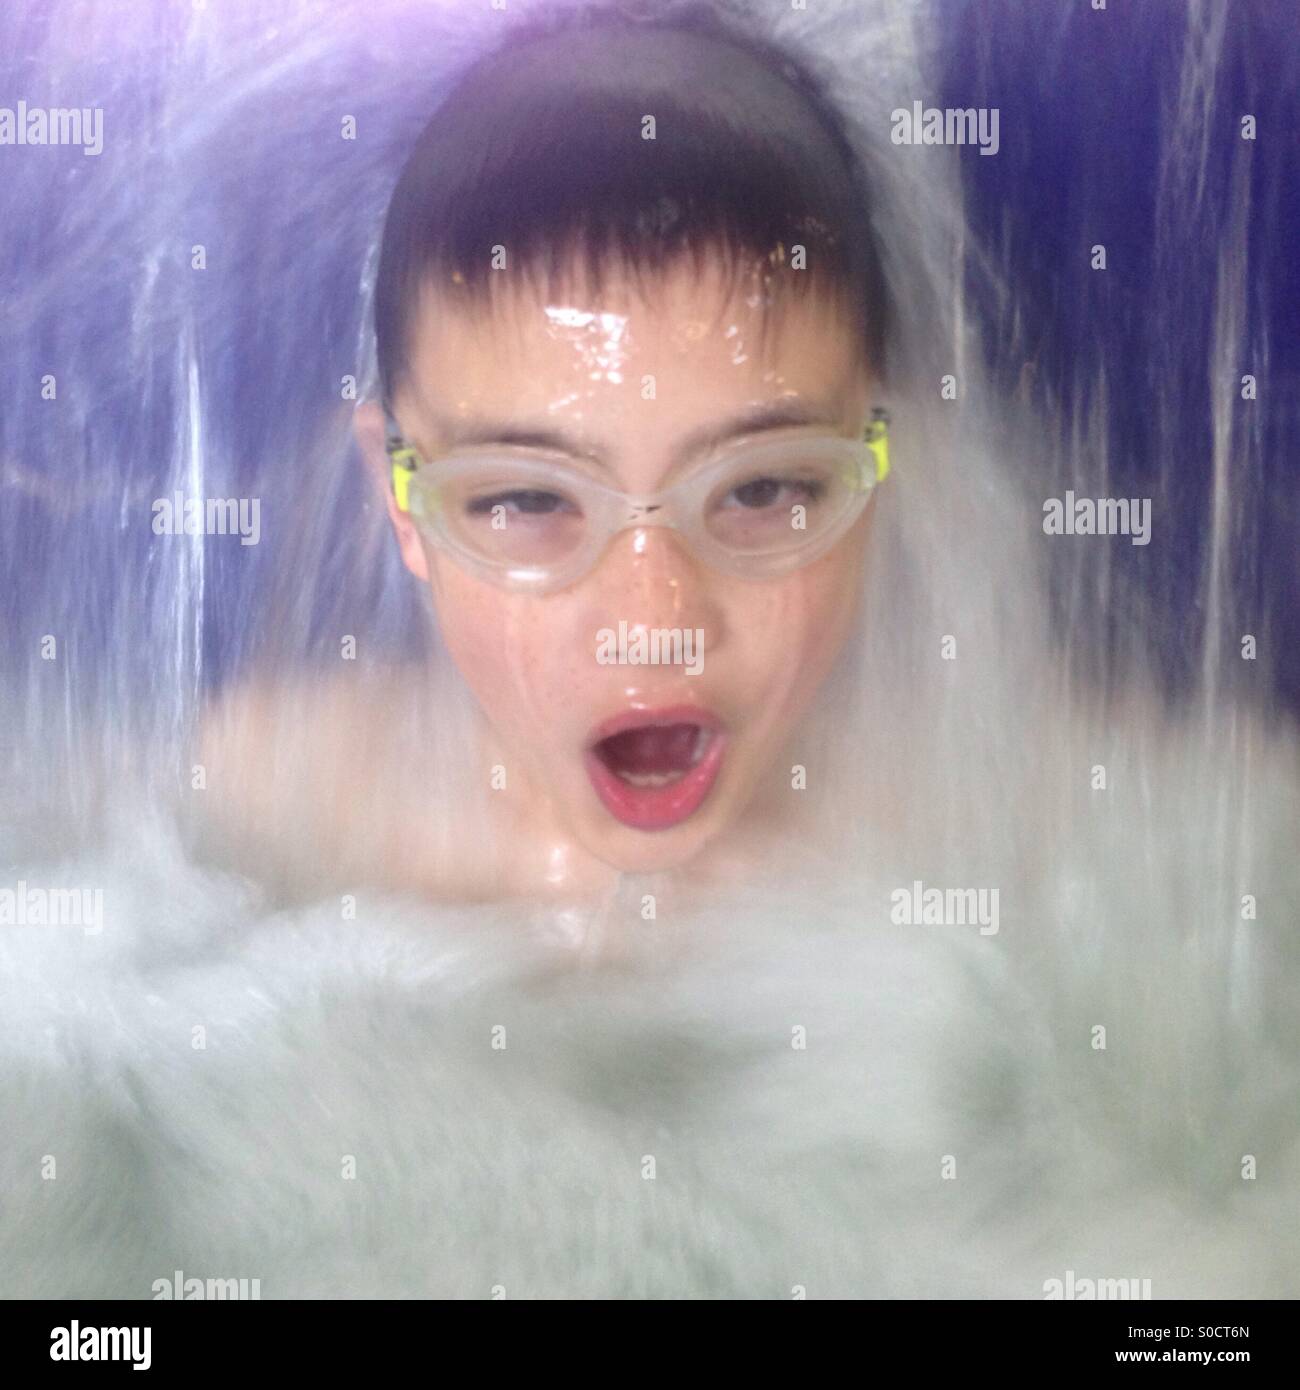 Boy in swimming pool and waterfall Stock Photo